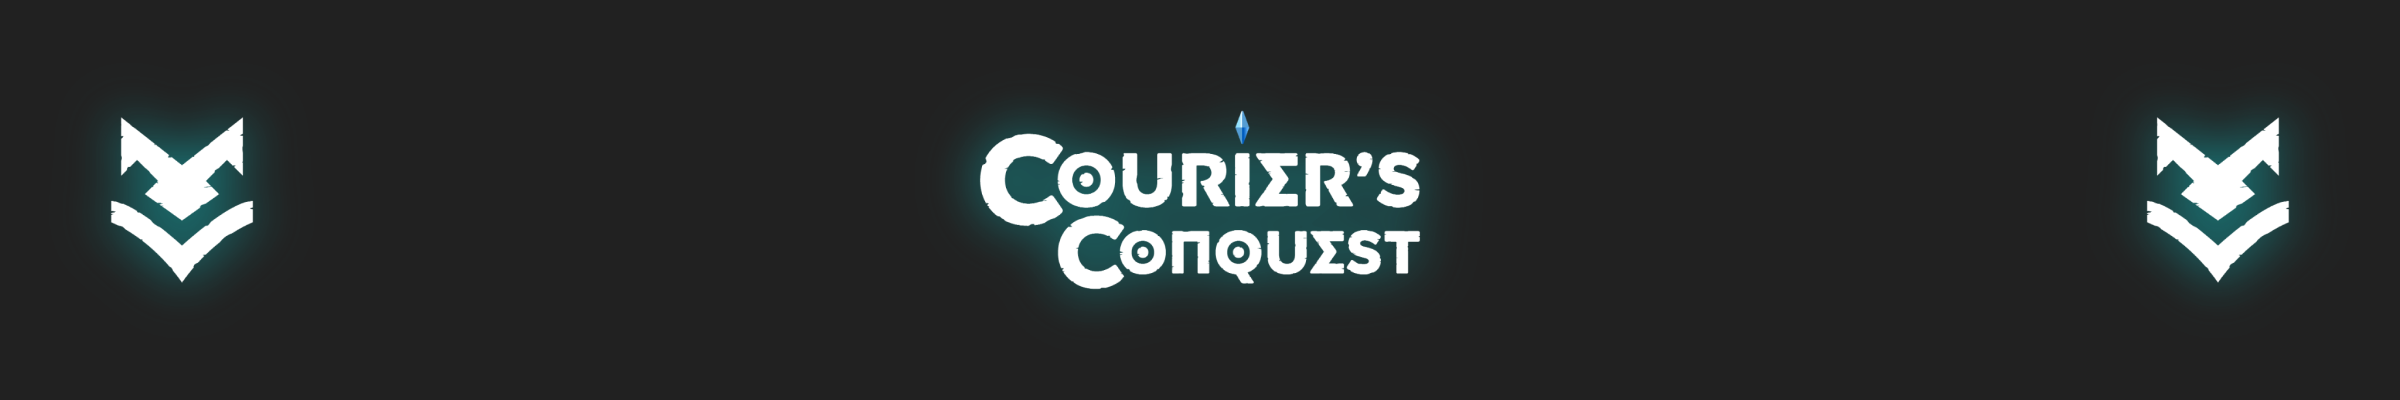 Courier's Conquest